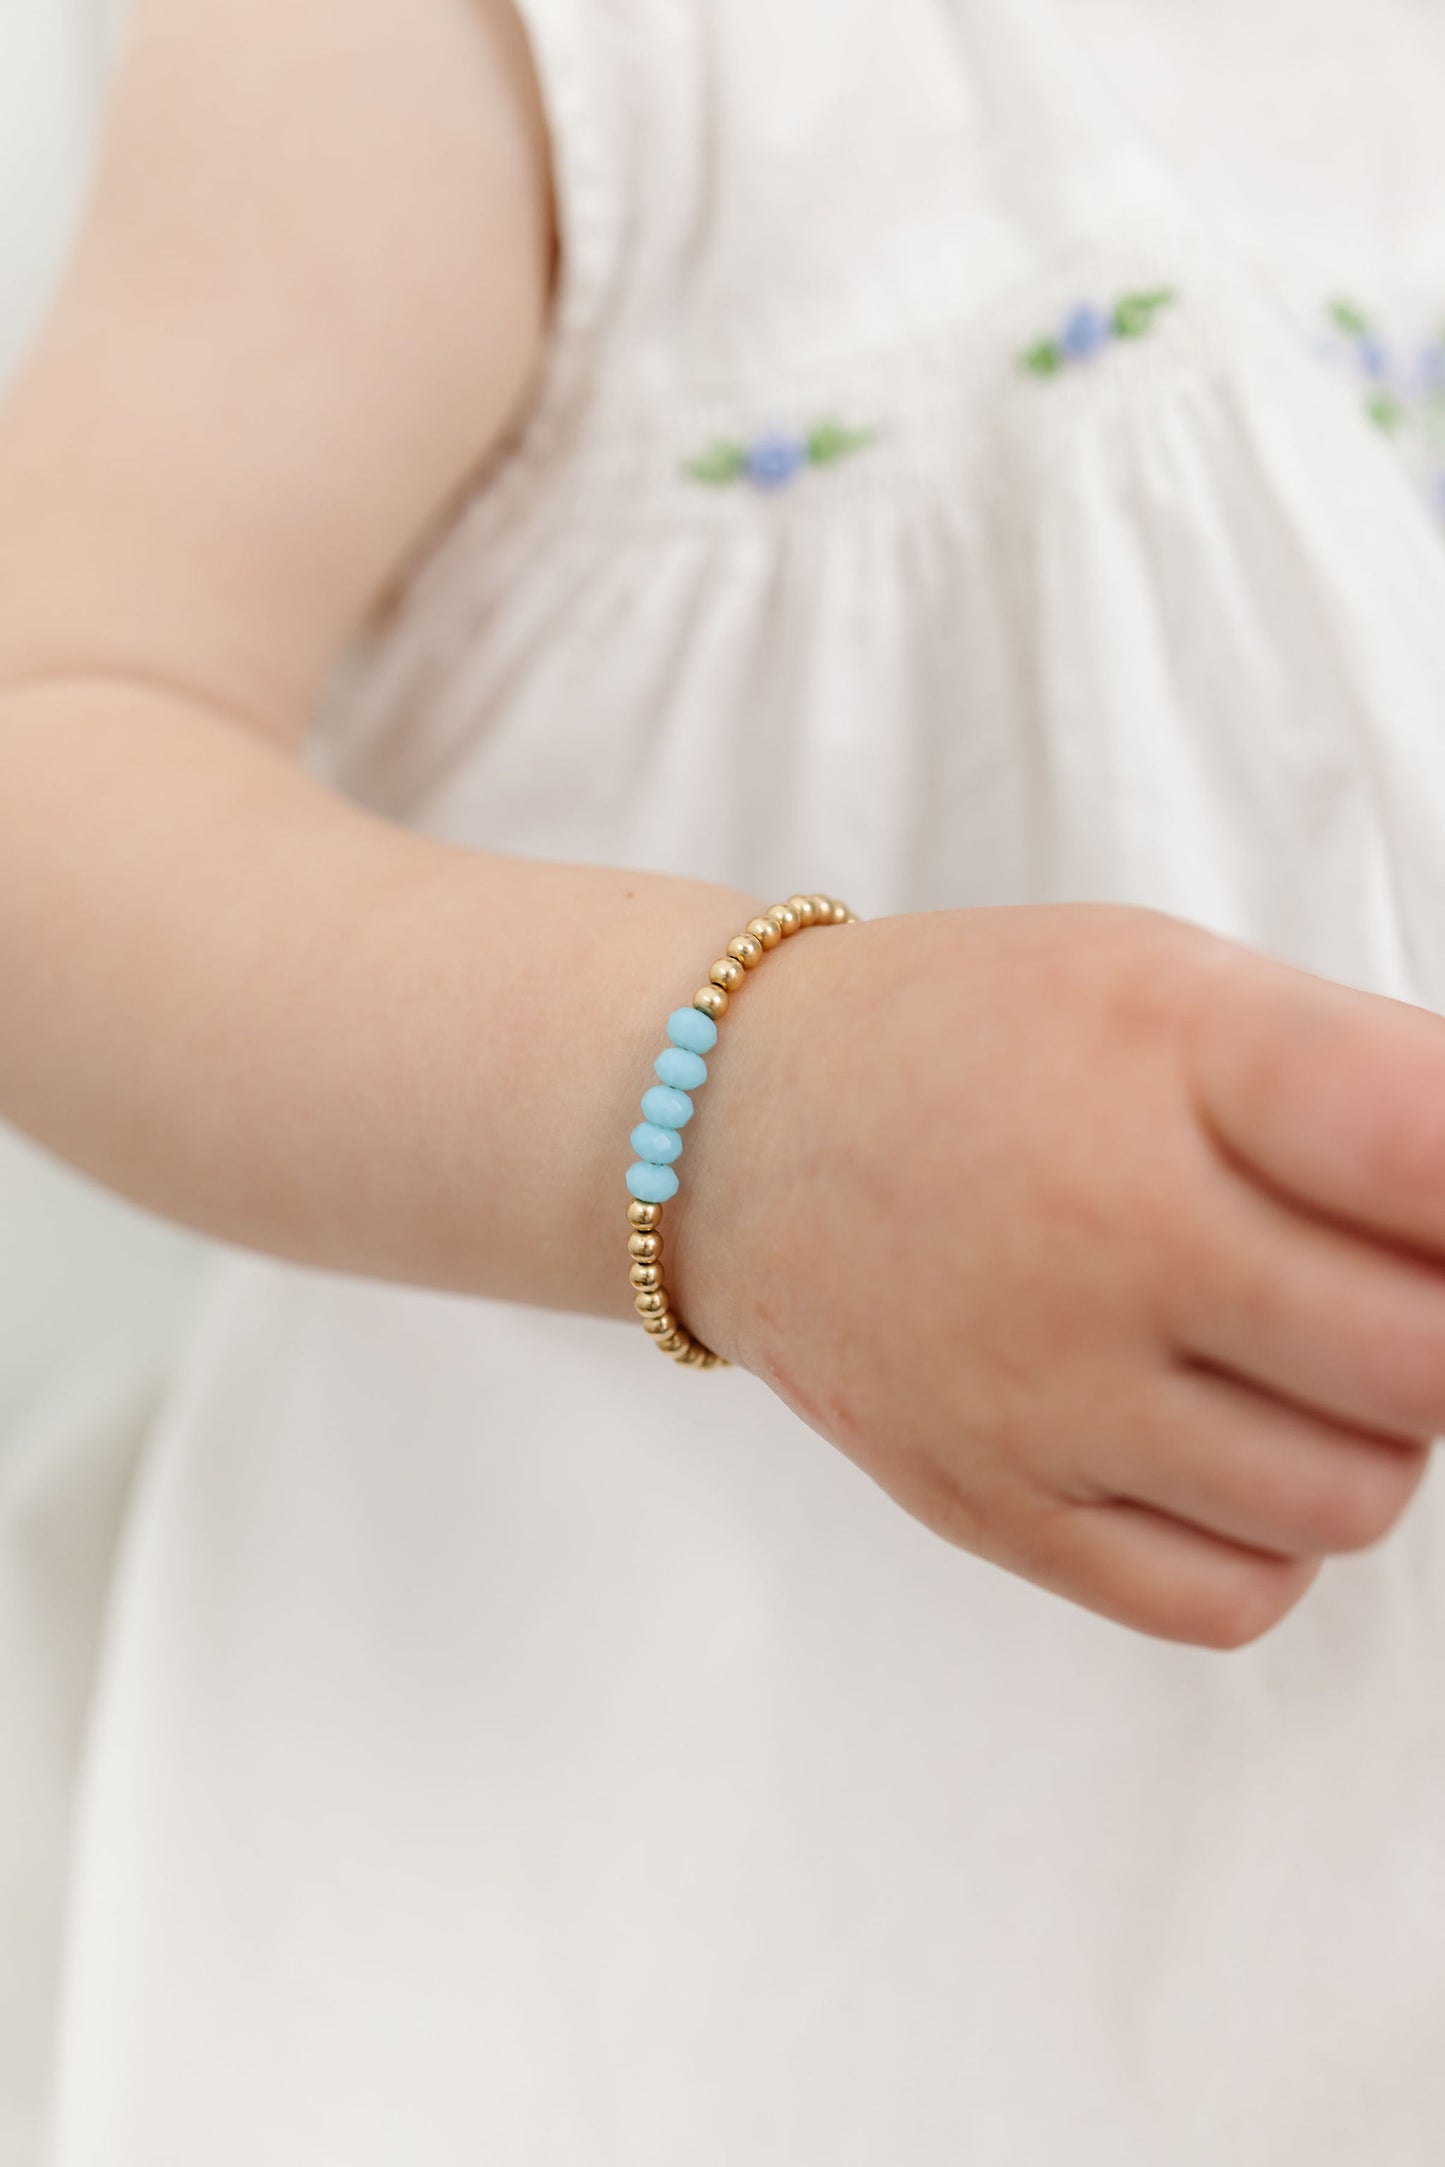 Grey Baby Bracelet (3MM + 4MM beads)